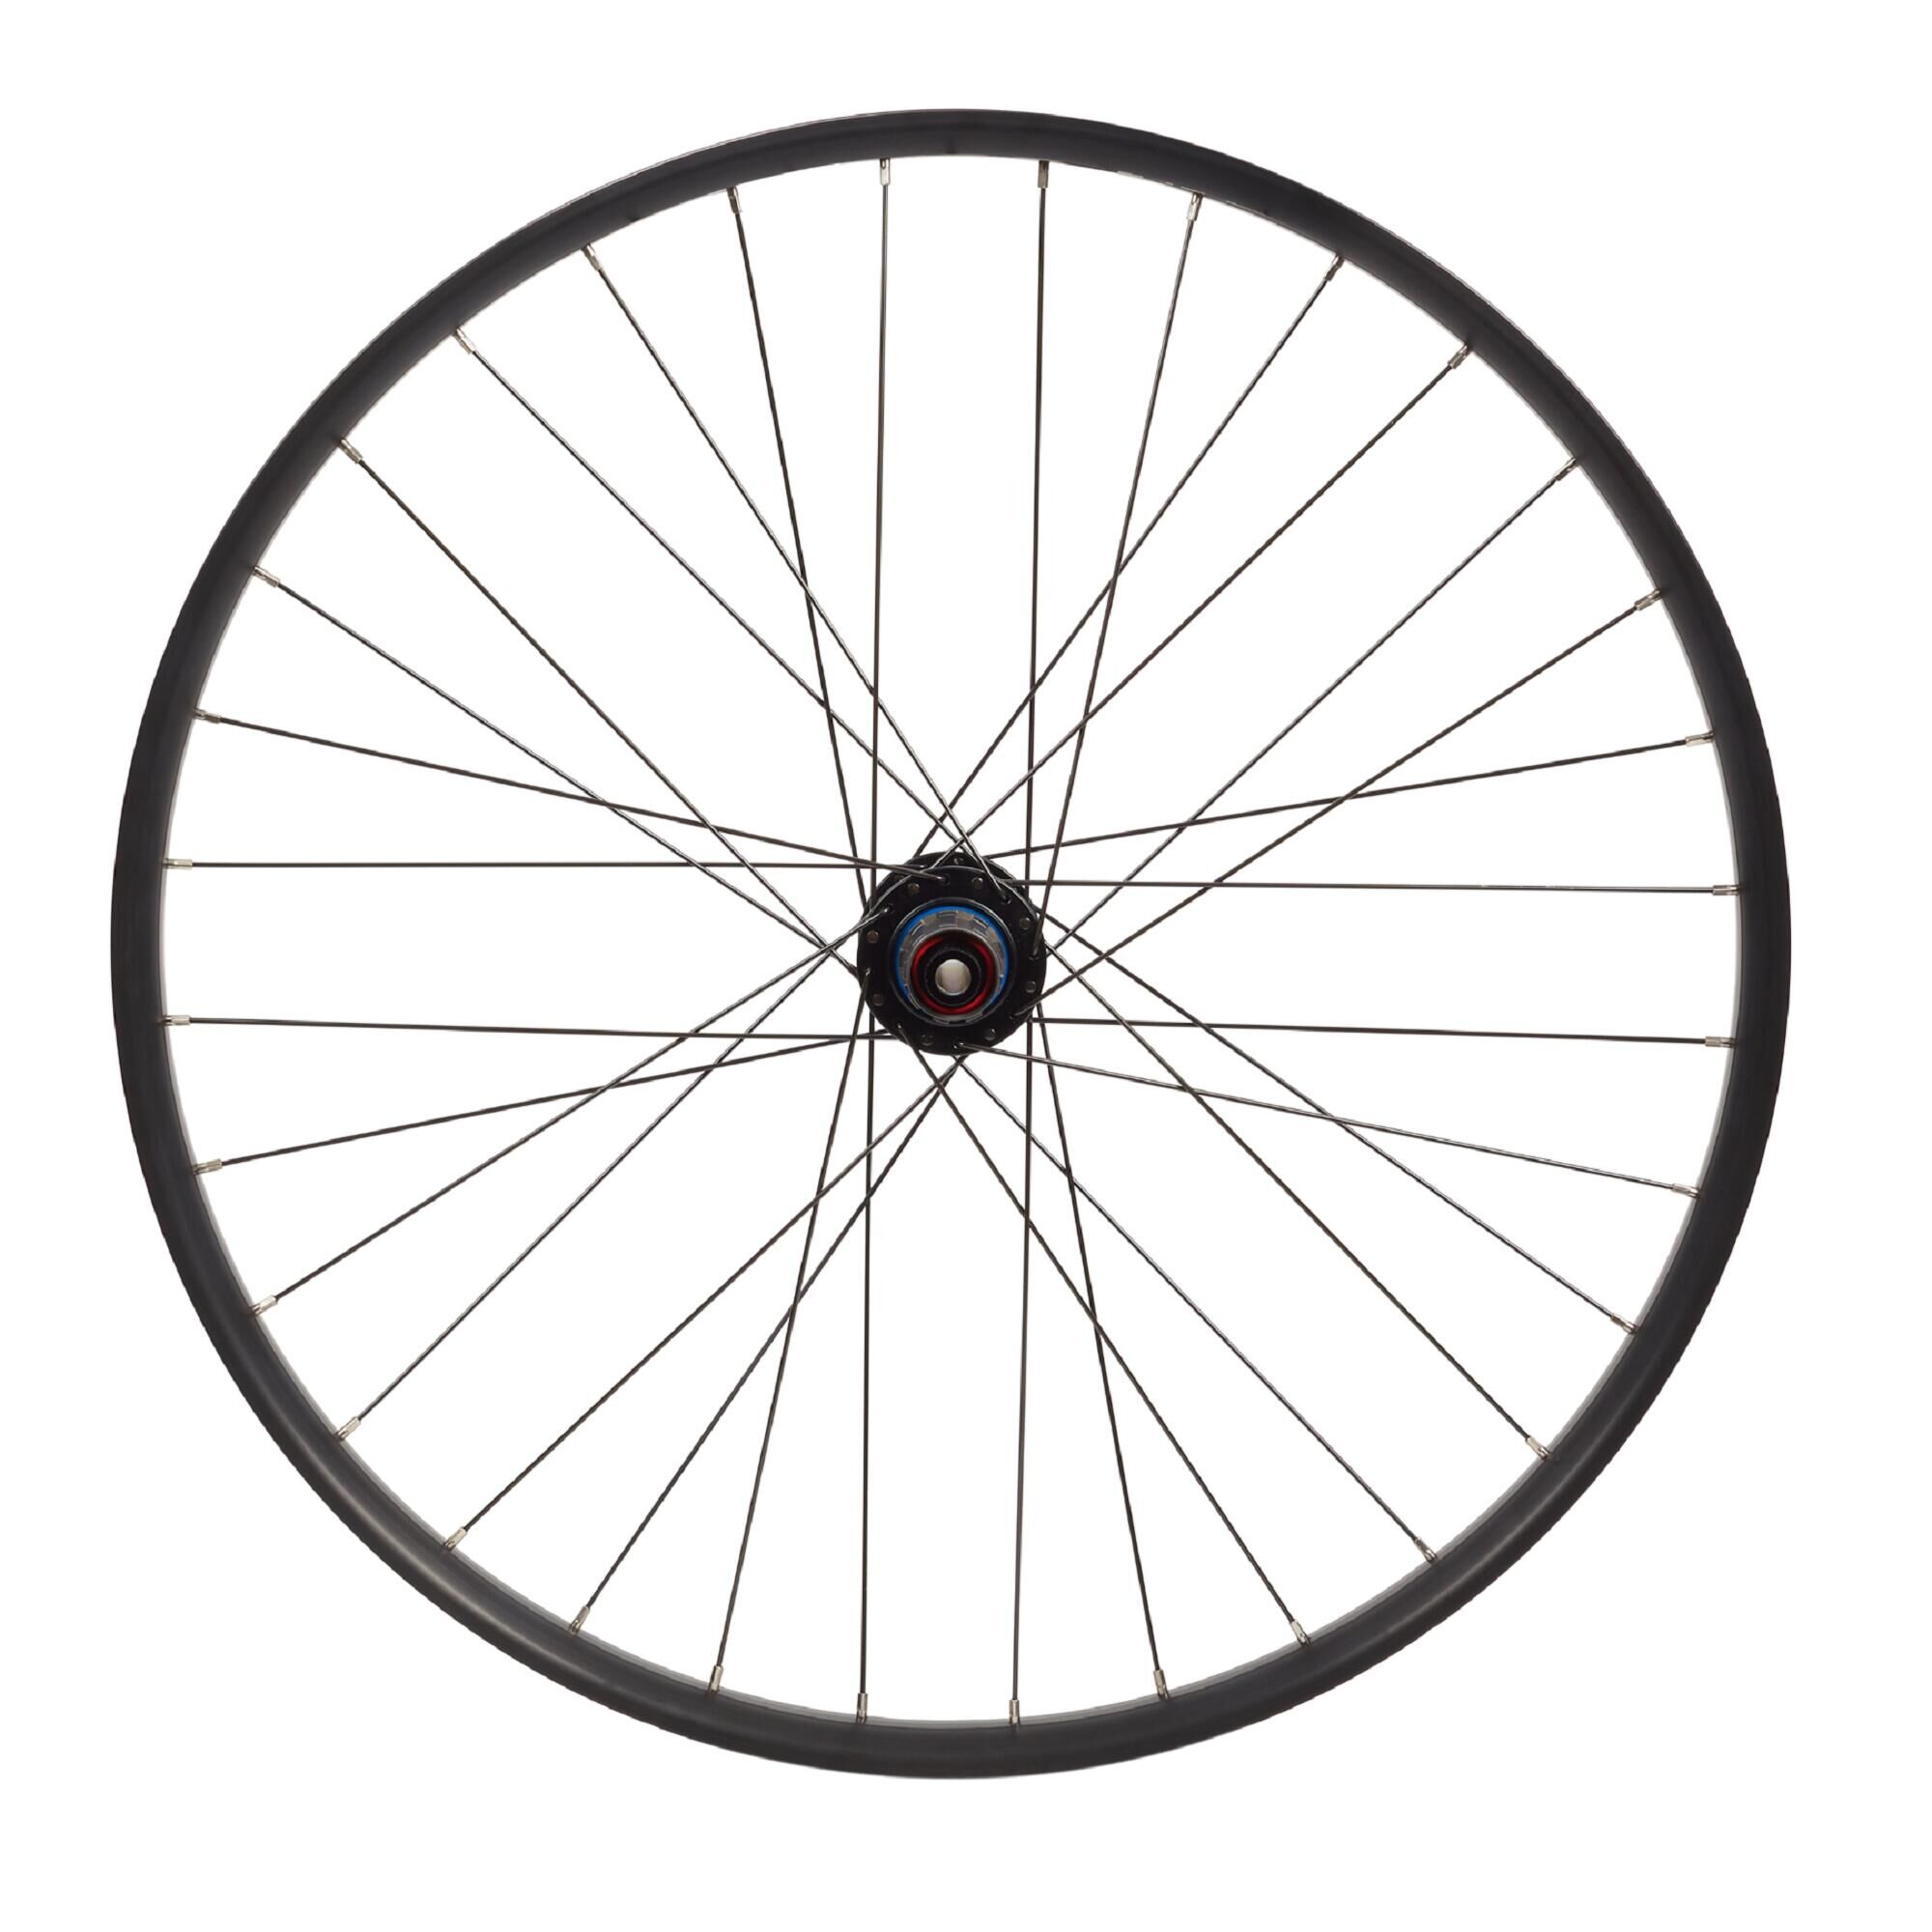 SUNRINGLE Mountain Bike Rear Wheel 27.5+ Double Wall Disc Boost 12x148 Duroc 40 TR